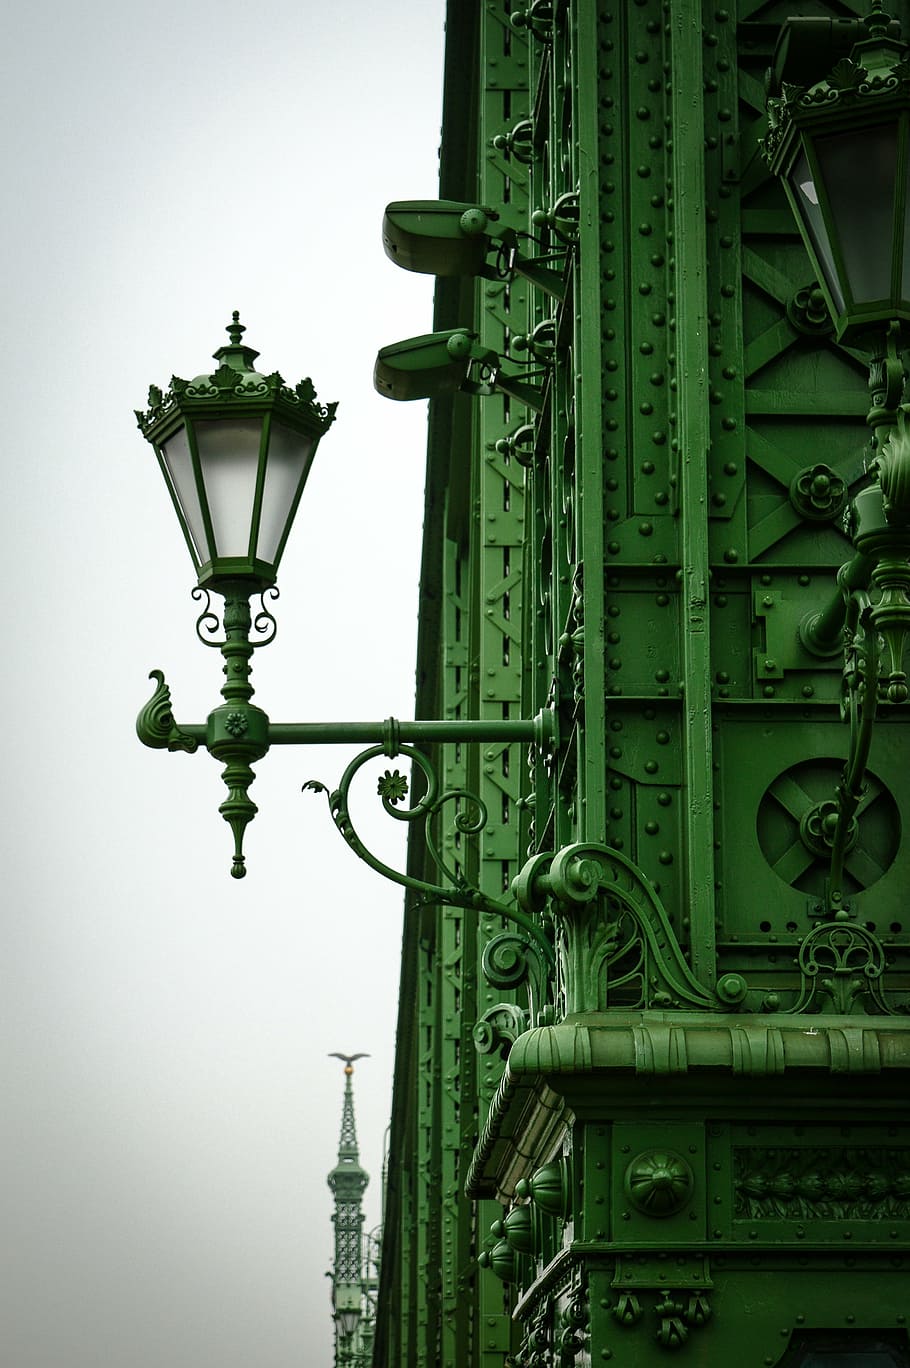 szabadság híd, dom bridge, budapest, fog, detail, danube